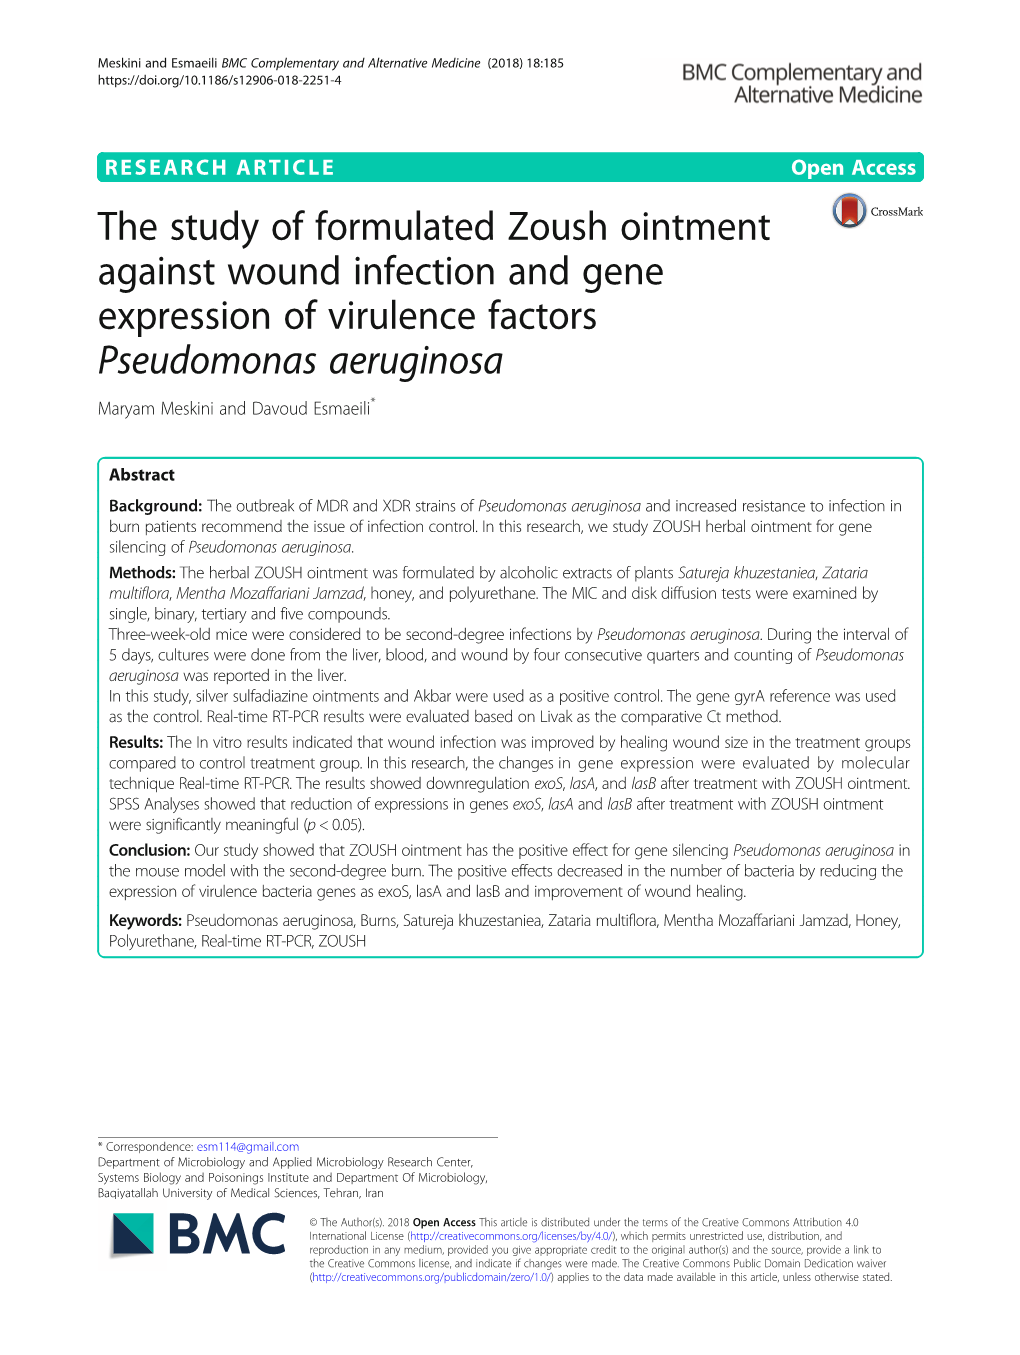 The Study of Formulated Zoush Ointment Against Wound Infection and Gene Expression of Virulence Factors Pseudomonas Aeruginosa Maryam Meskini and Davoud Esmaeili*